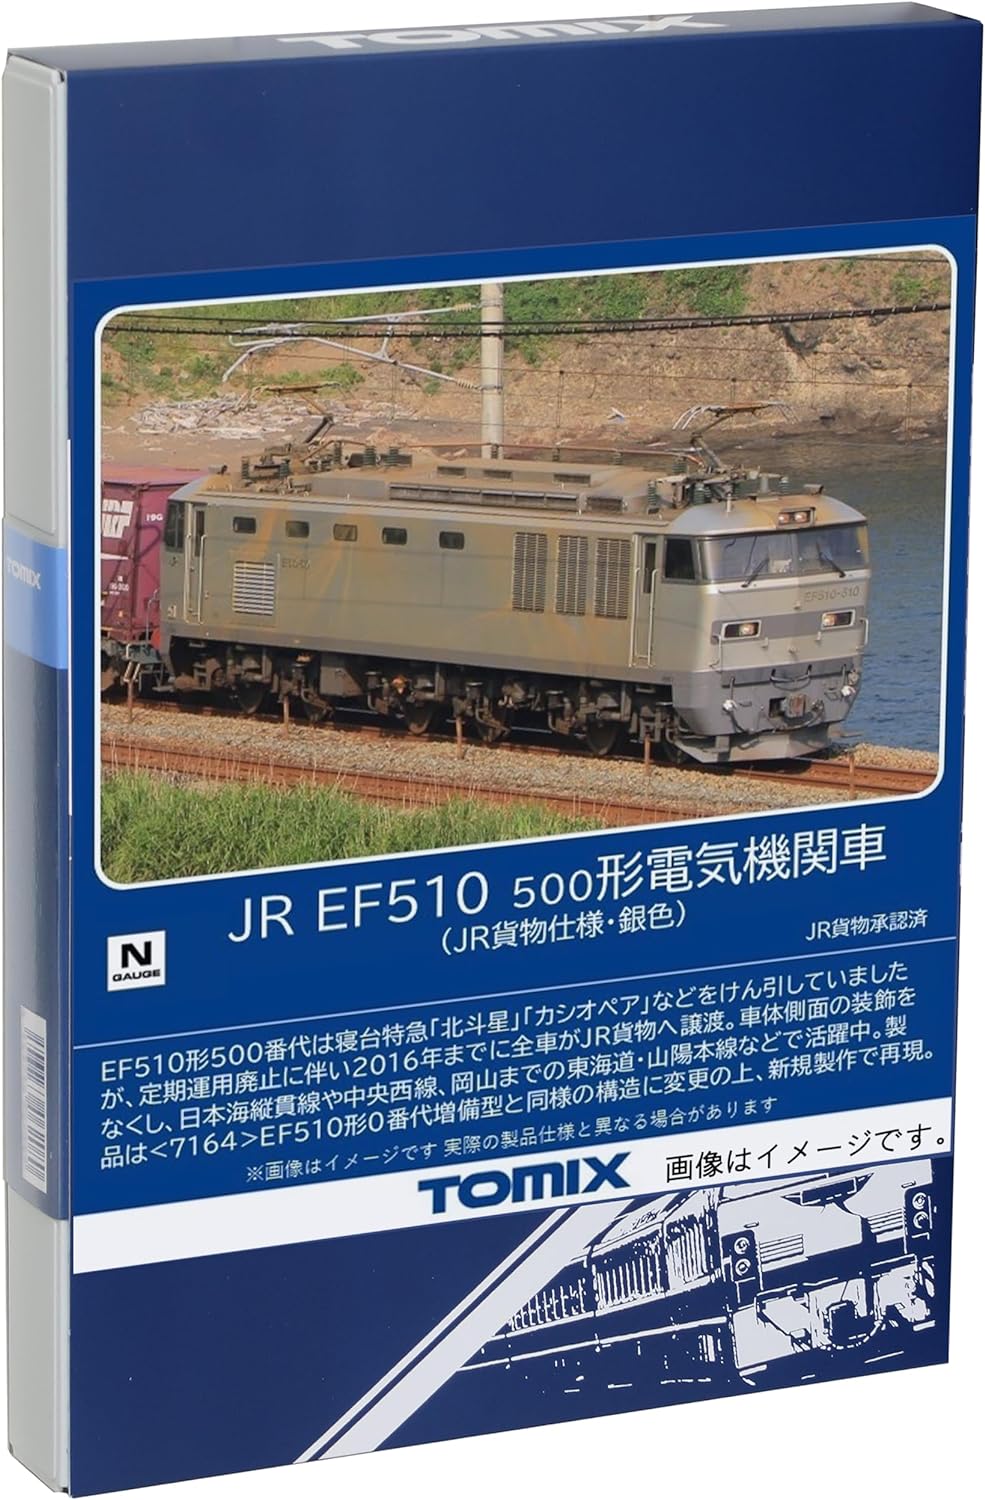 TOMIX 7183 N Gauge JR EF510 Type 500 JR Cargo Specifications, Silver Railway Model Electric Locomotive - BanzaiHobby